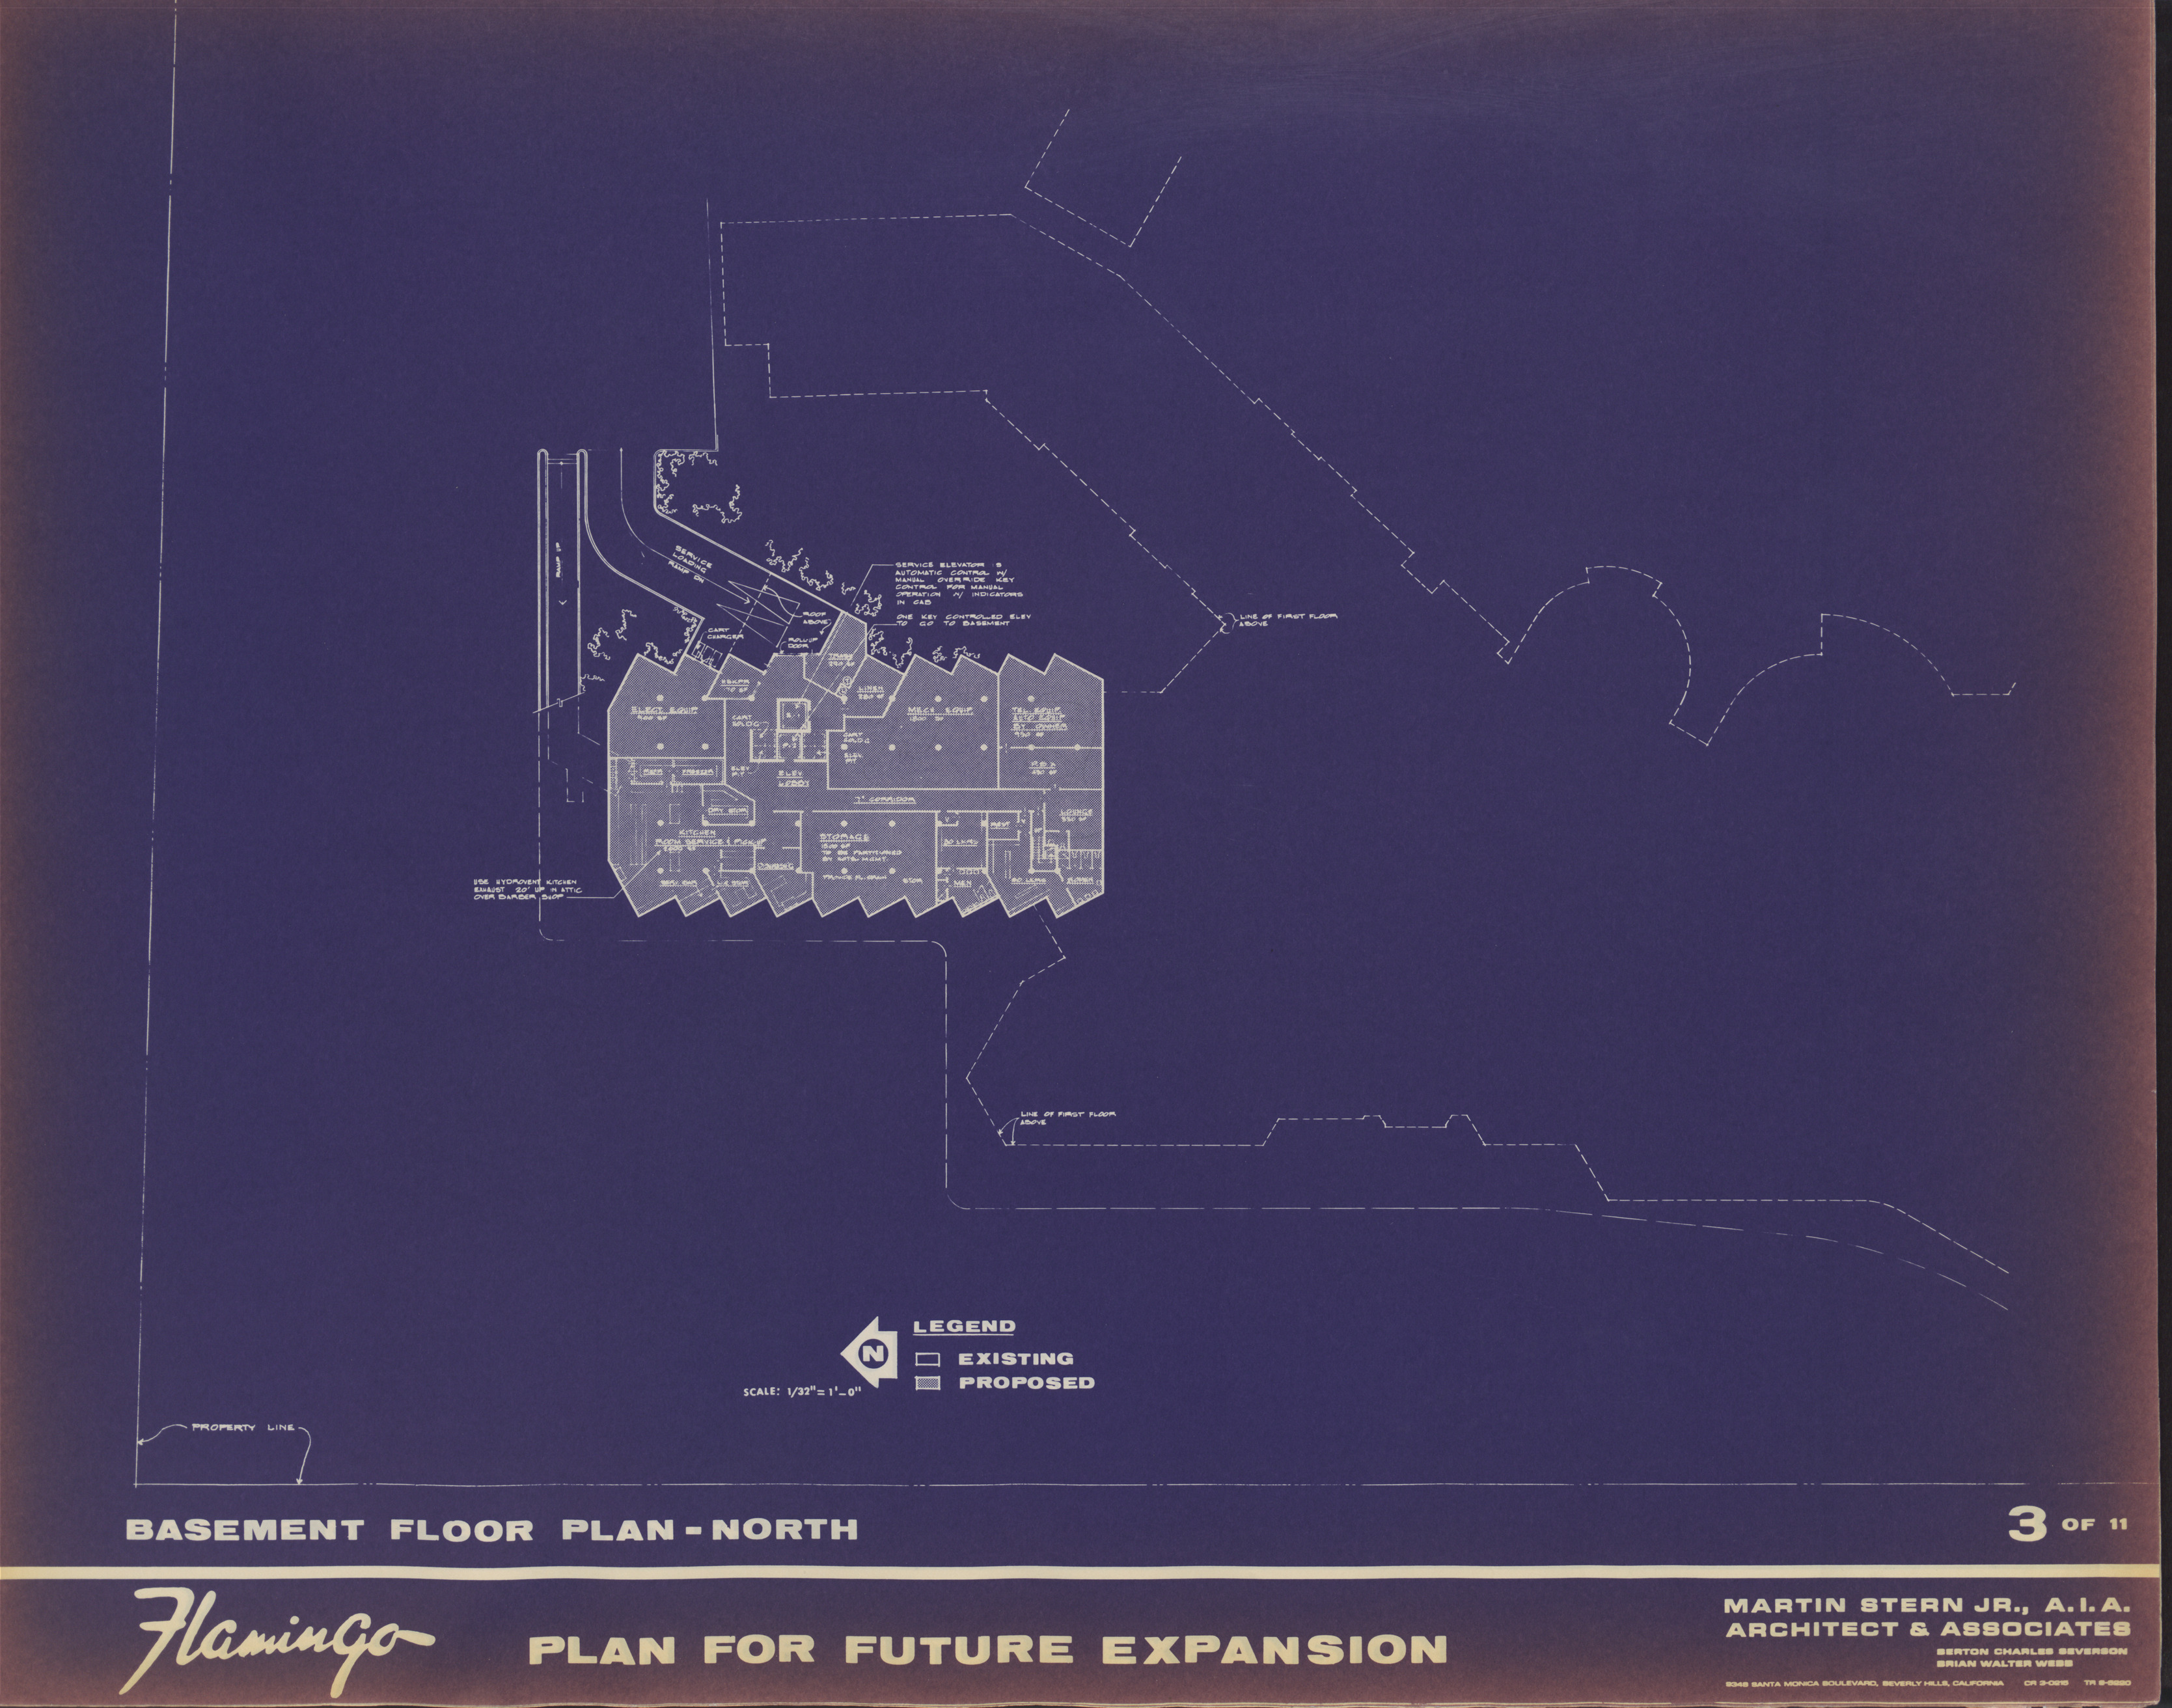 Flamingo Plan for Future Expansion Proposal, image 3